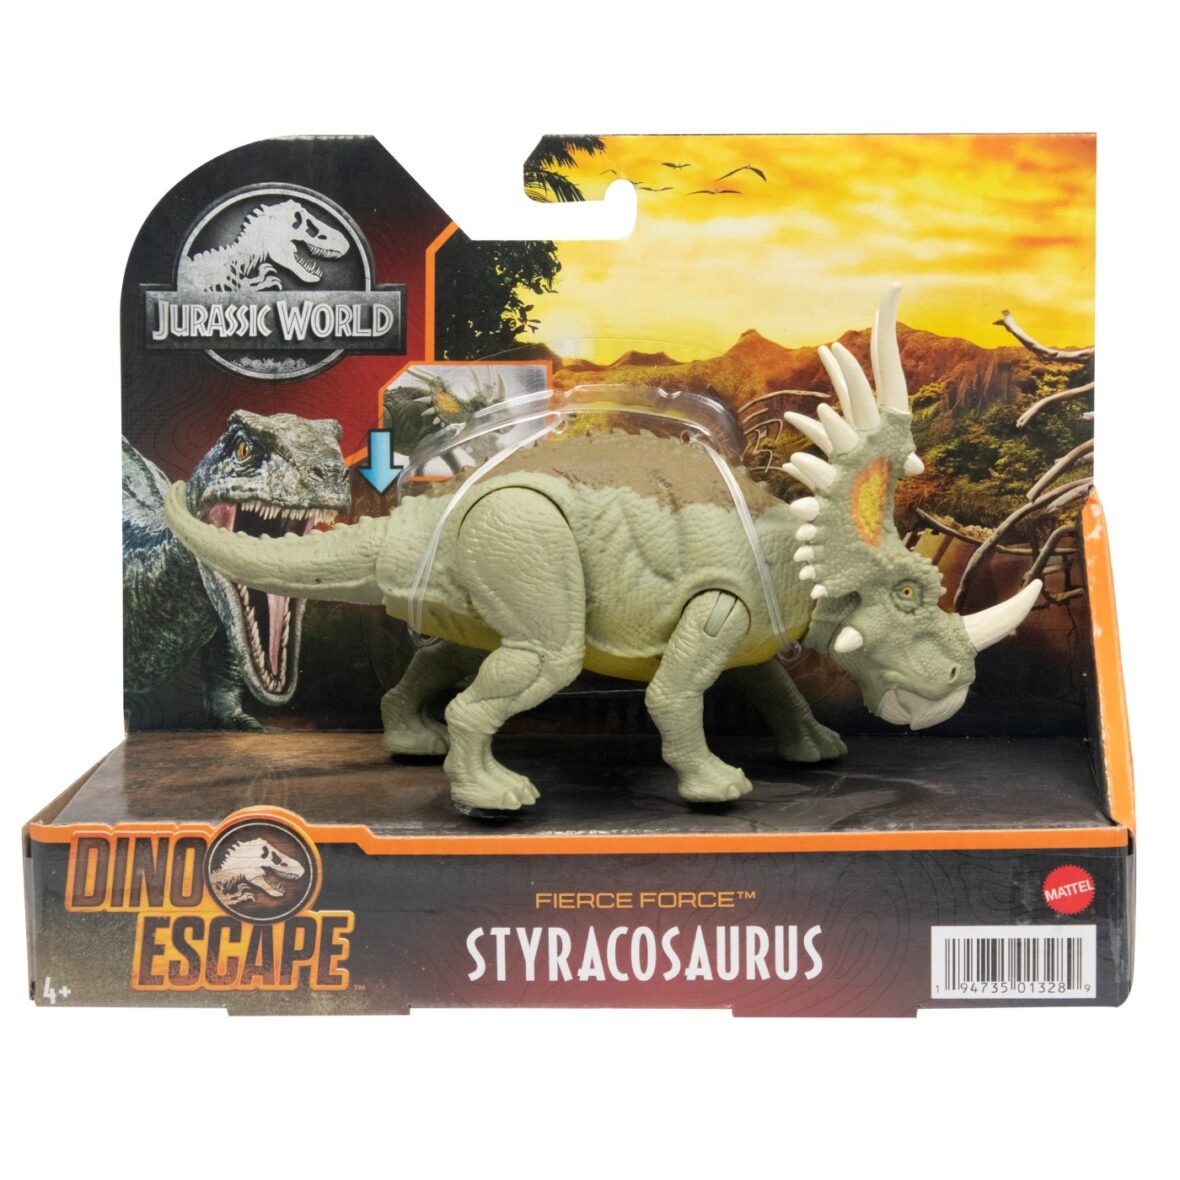 Jurassic World Dino Escape Fierce Force Dinozaur Styracosaurus